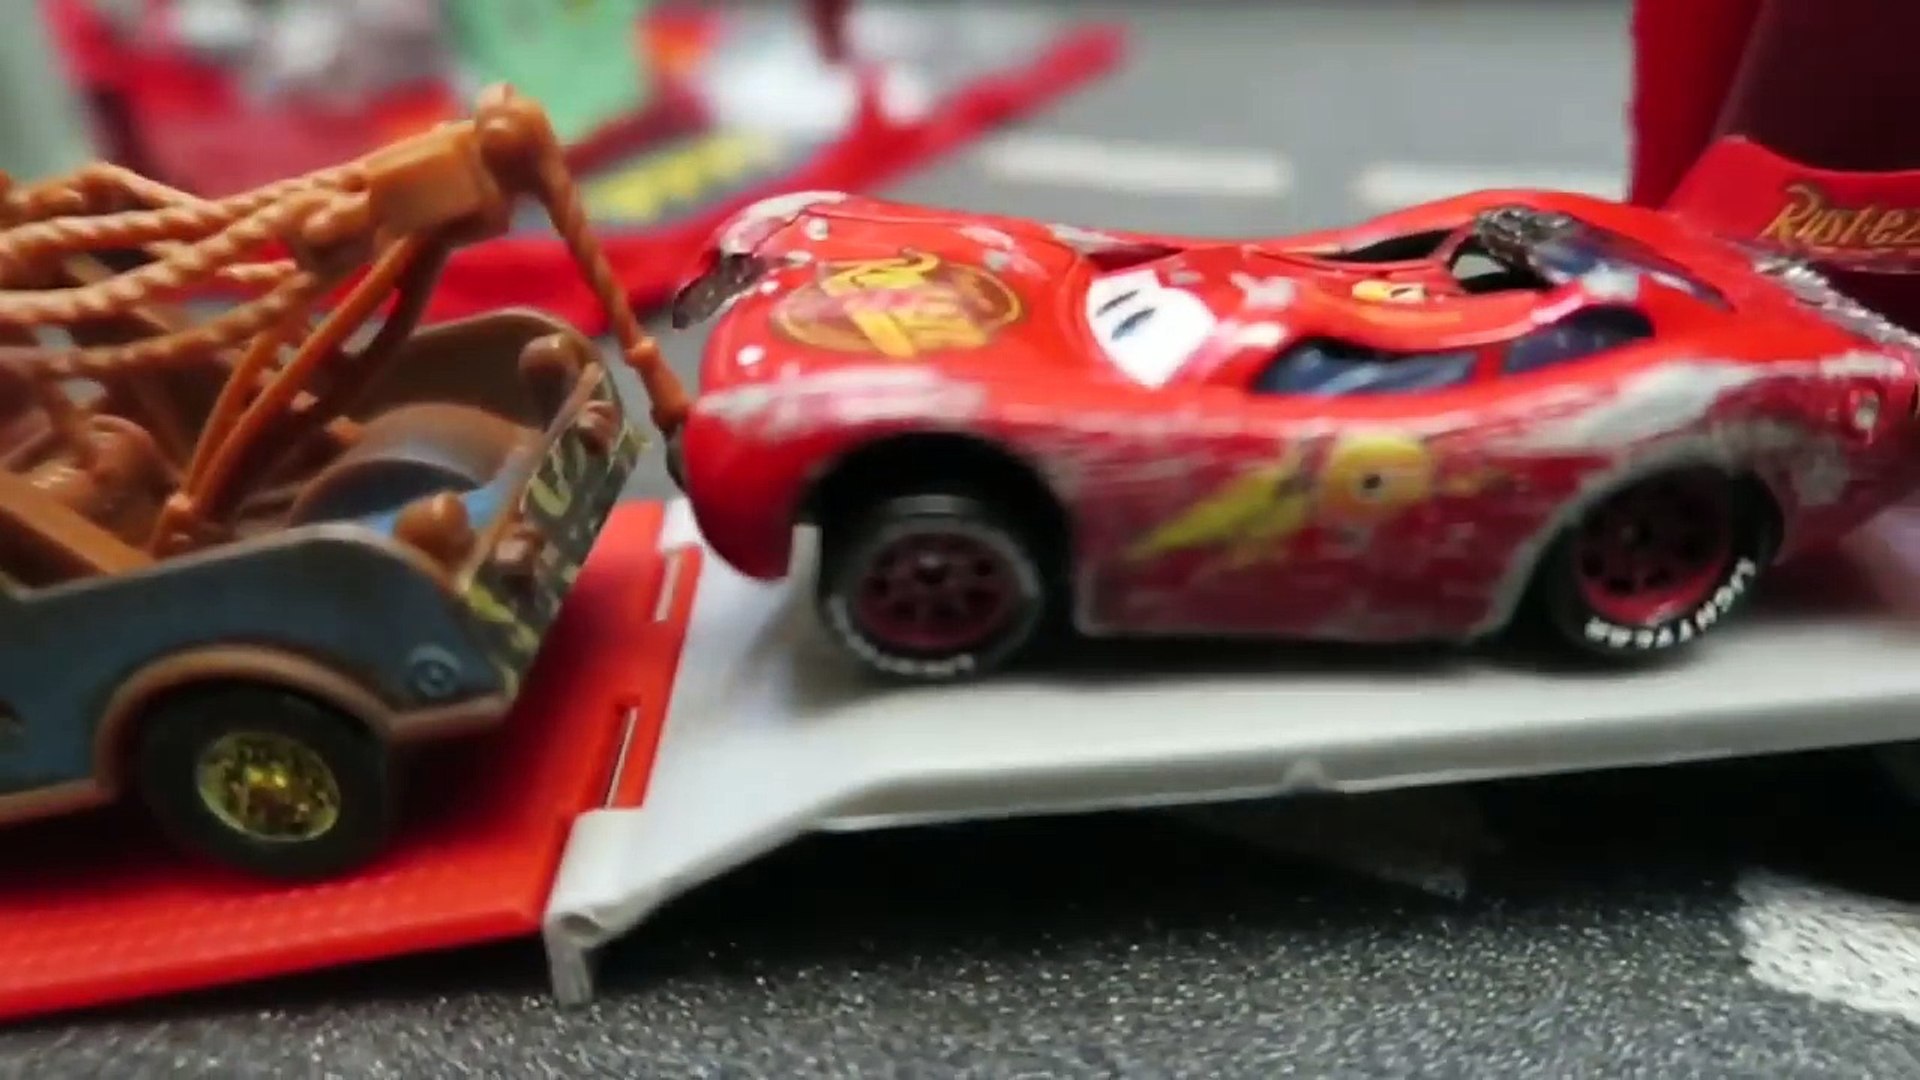 Movie Cars 3 : McQueen's Crash Scene Reenactment - StopMotion 